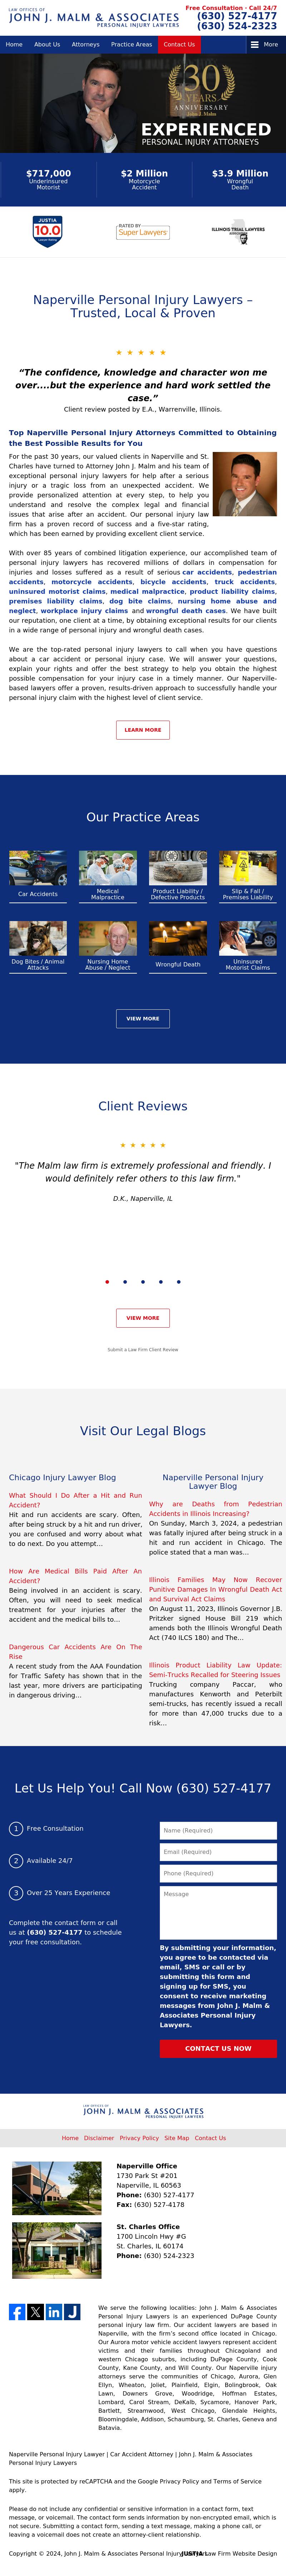 John J. Malm & Associates - Naperville IL Lawyers